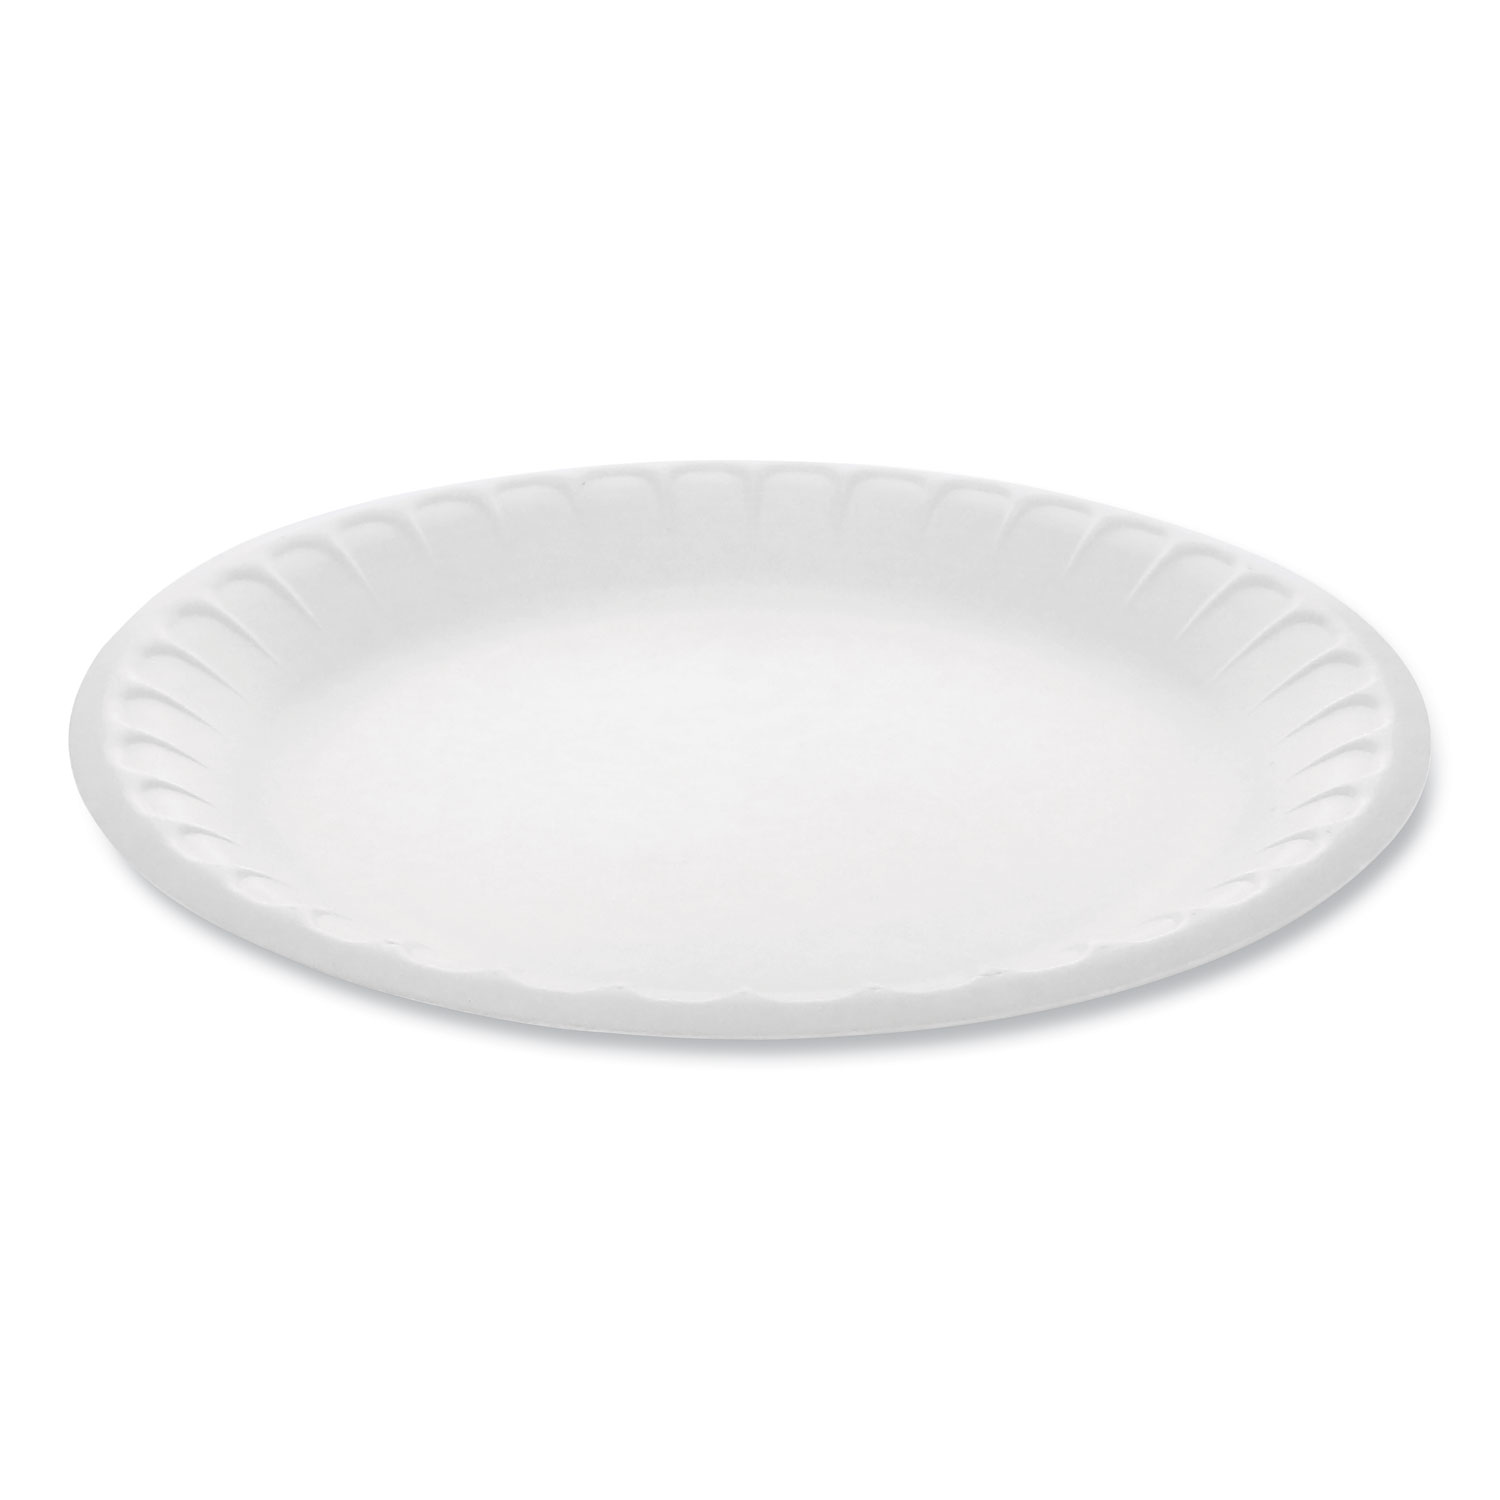  Pactiv 0TH100090000 Unlaminated Foam Dinnerware, Plate, 9 Diameter, White, 500/Carton (PCT0TH100090000) 